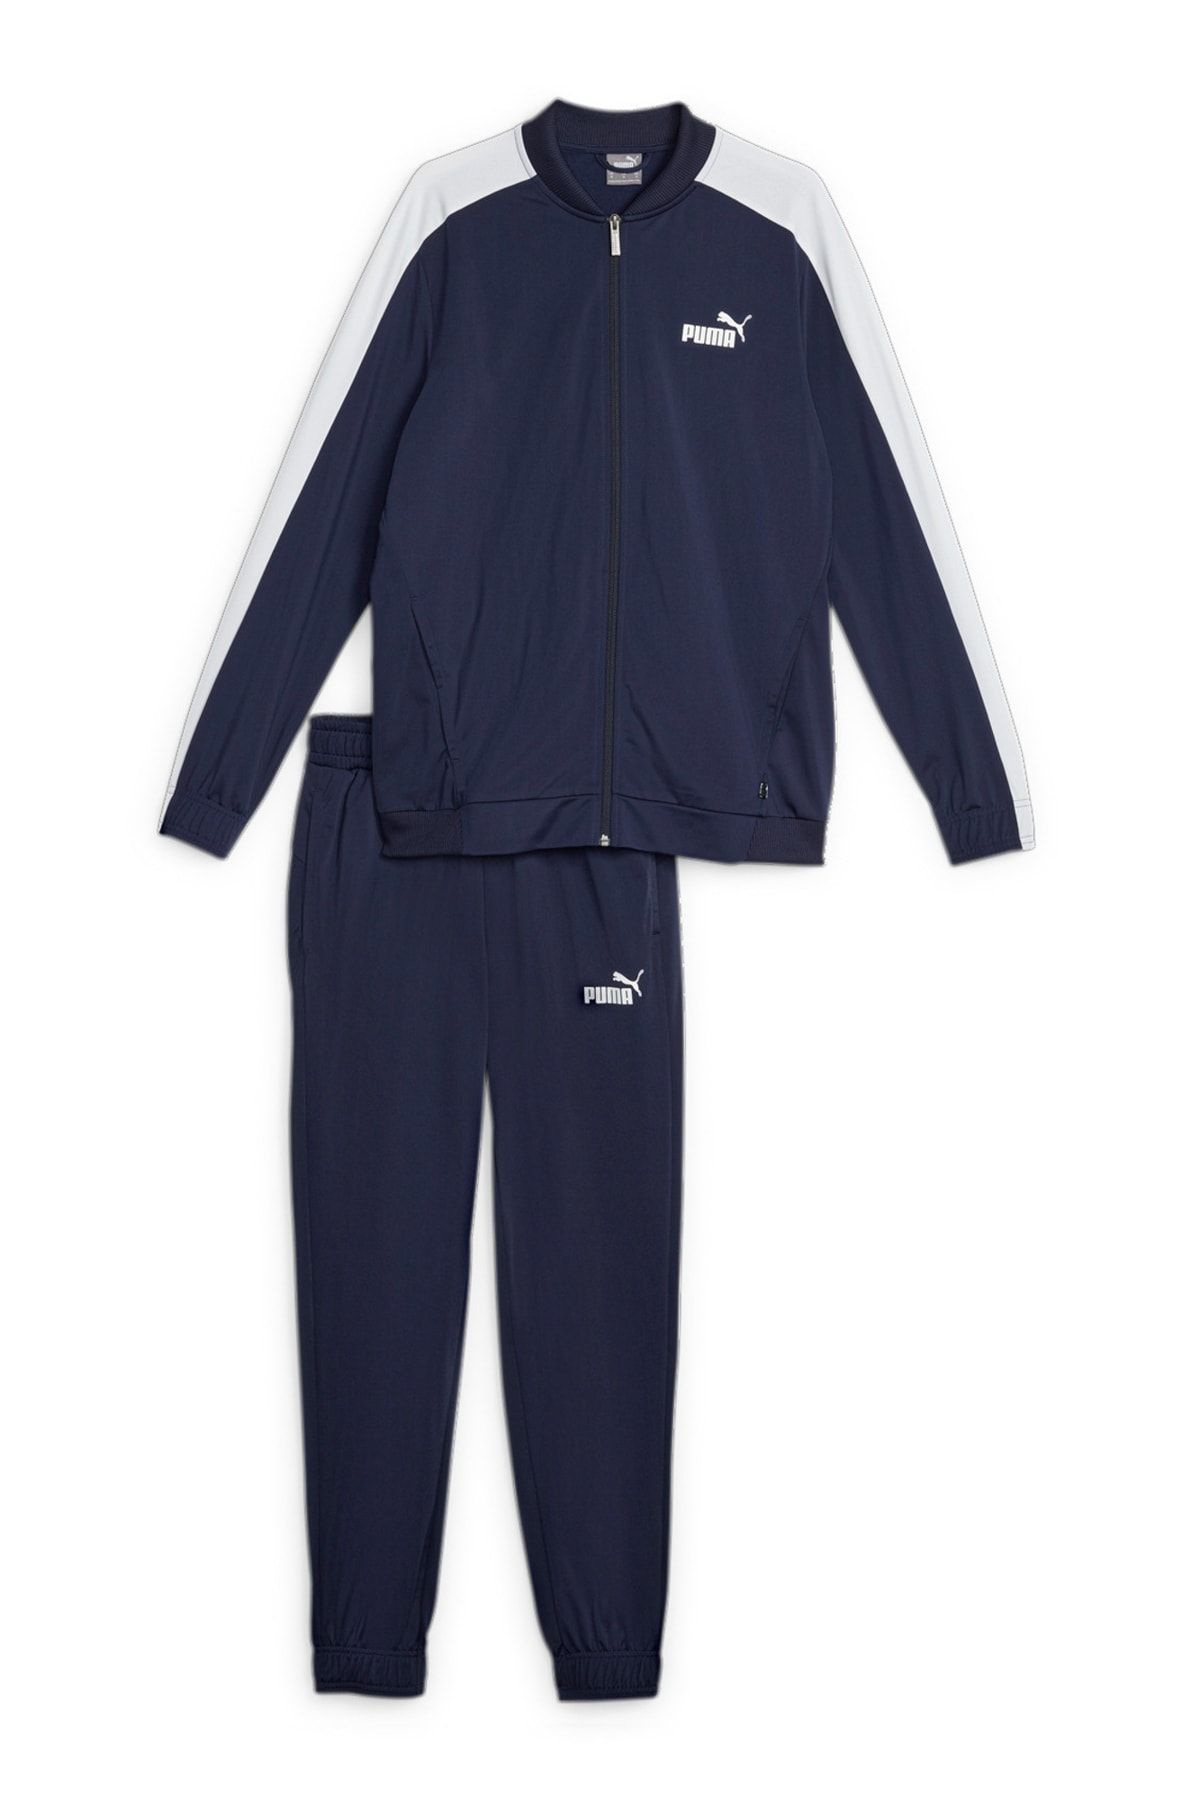 Puma Baseball Tricot Suit